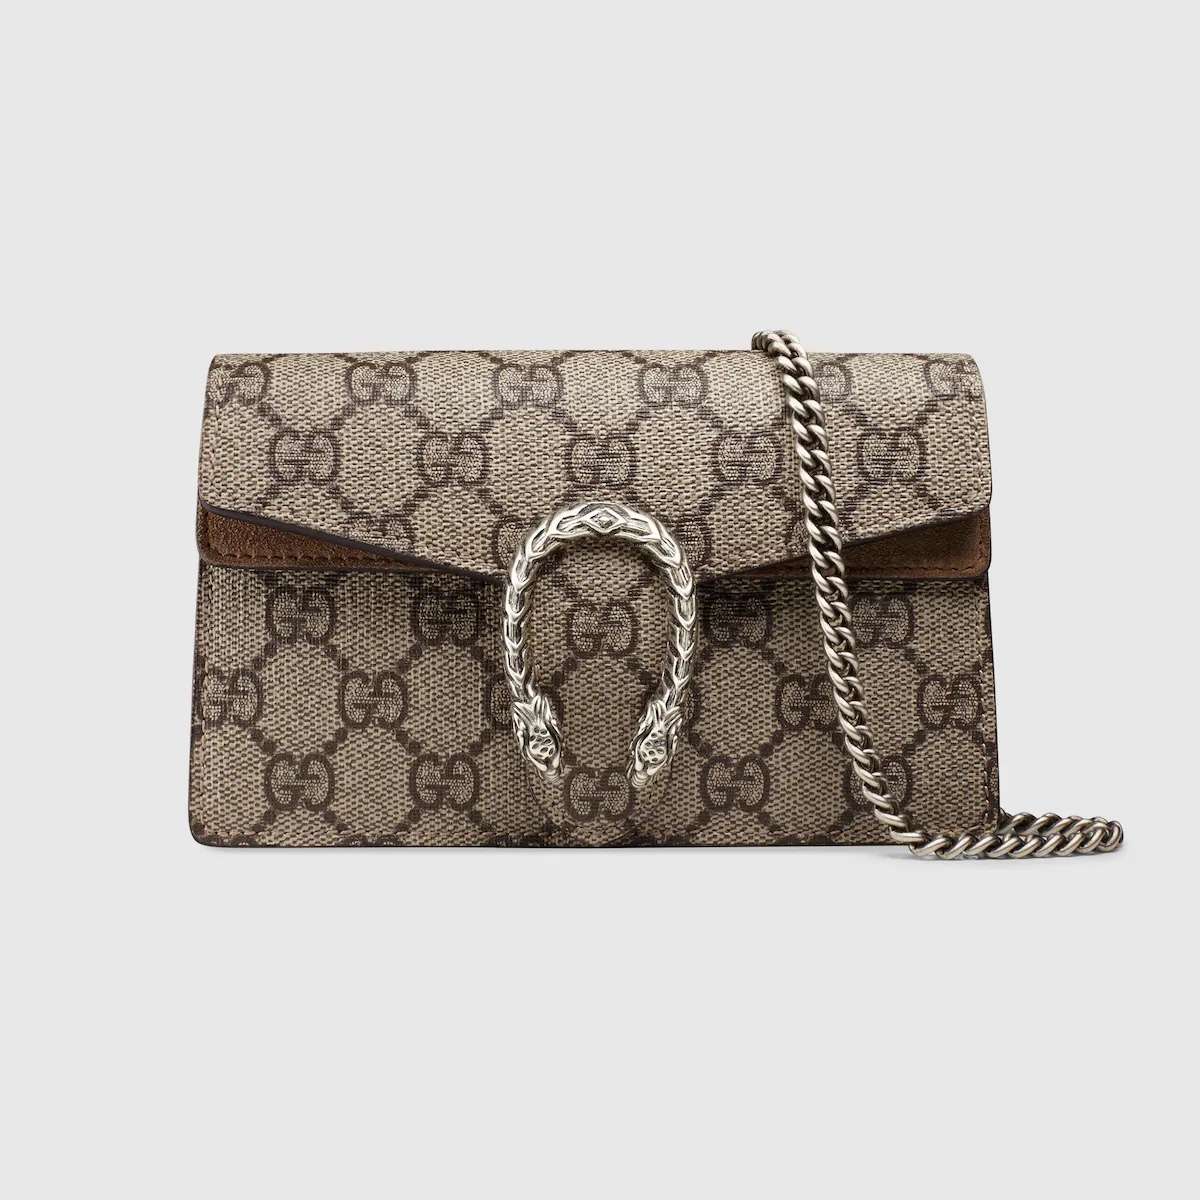 Gucci Dionysus GG Supreme Supermini Bag